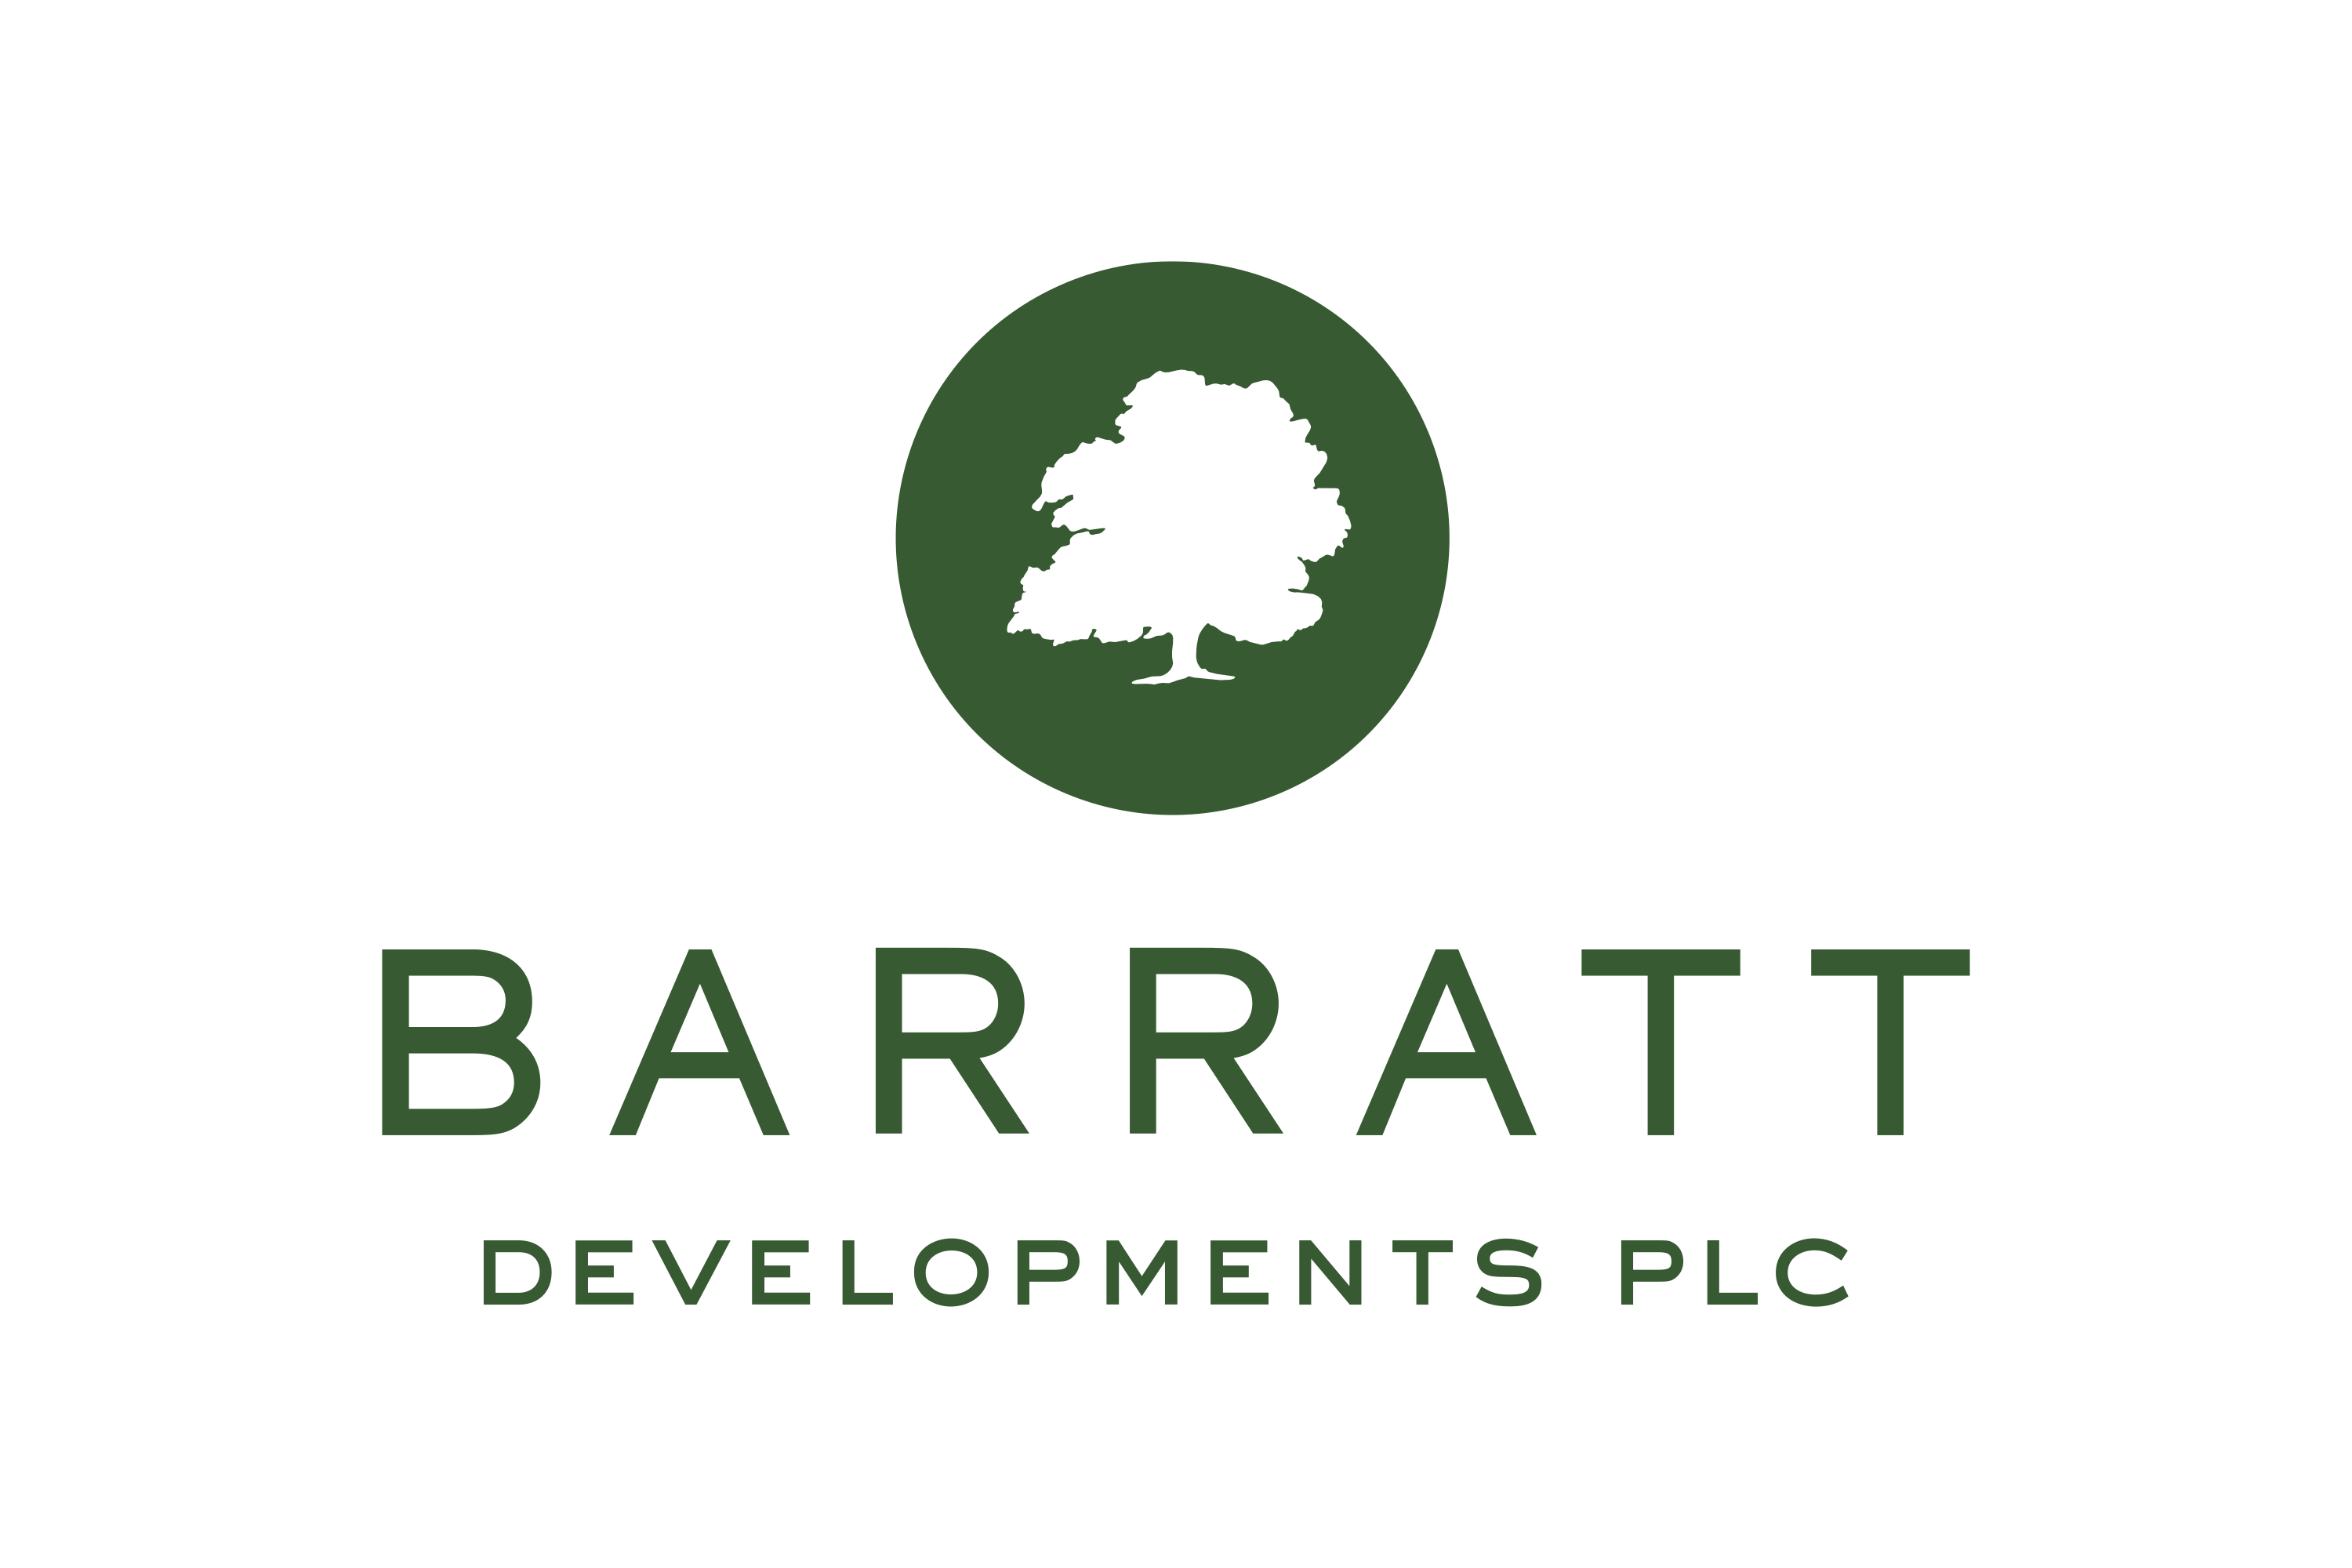 Barratt Developments Logo